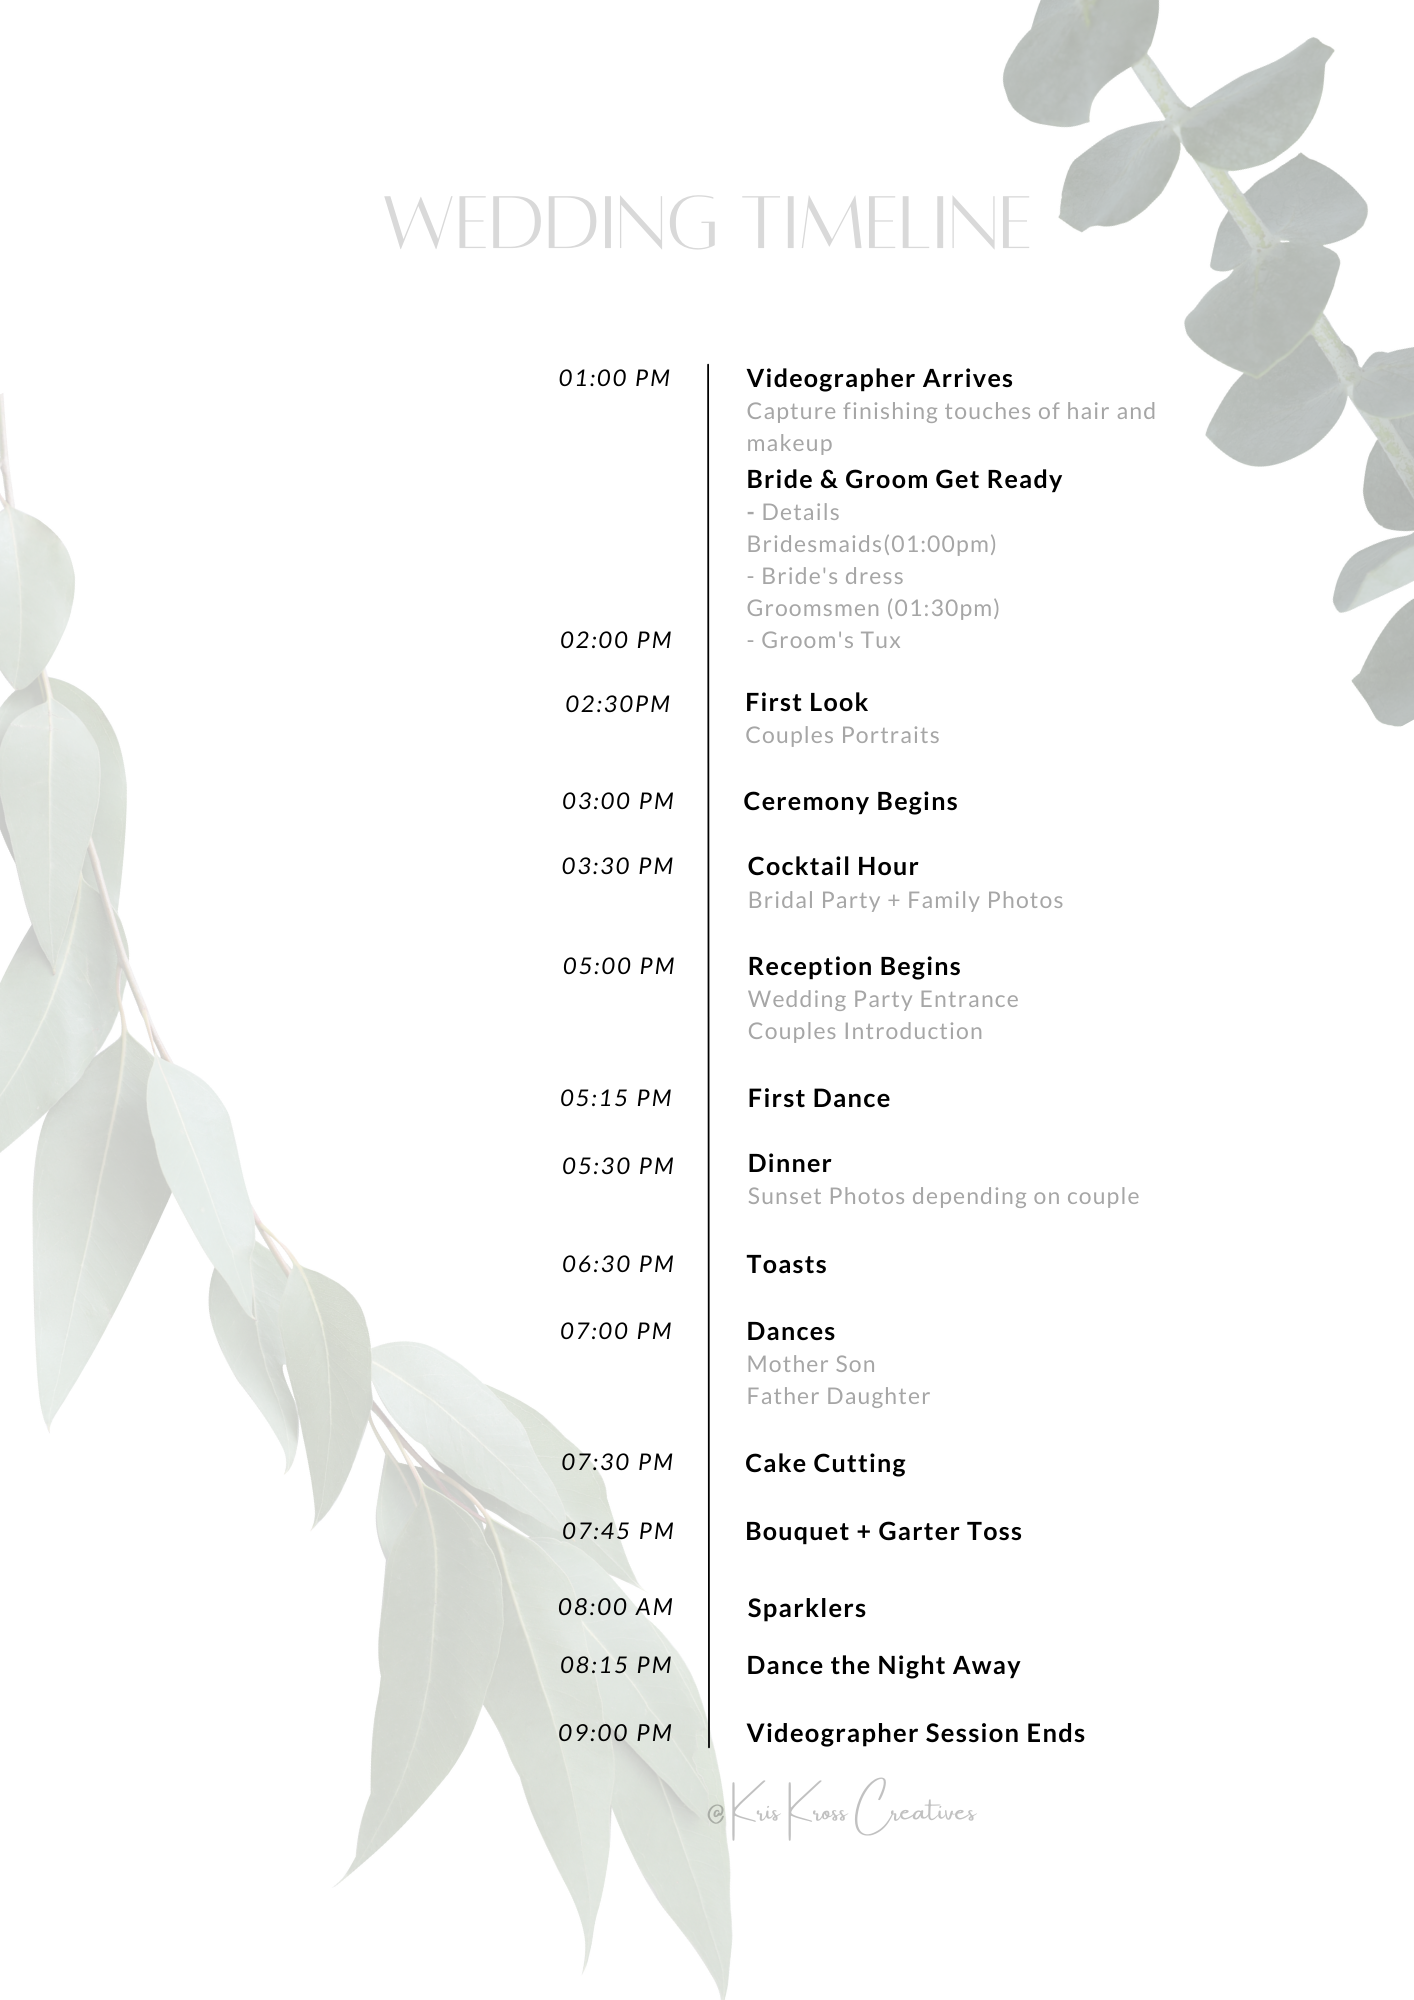 Kris Kross Creatives Traditional Wedding Day Timeline